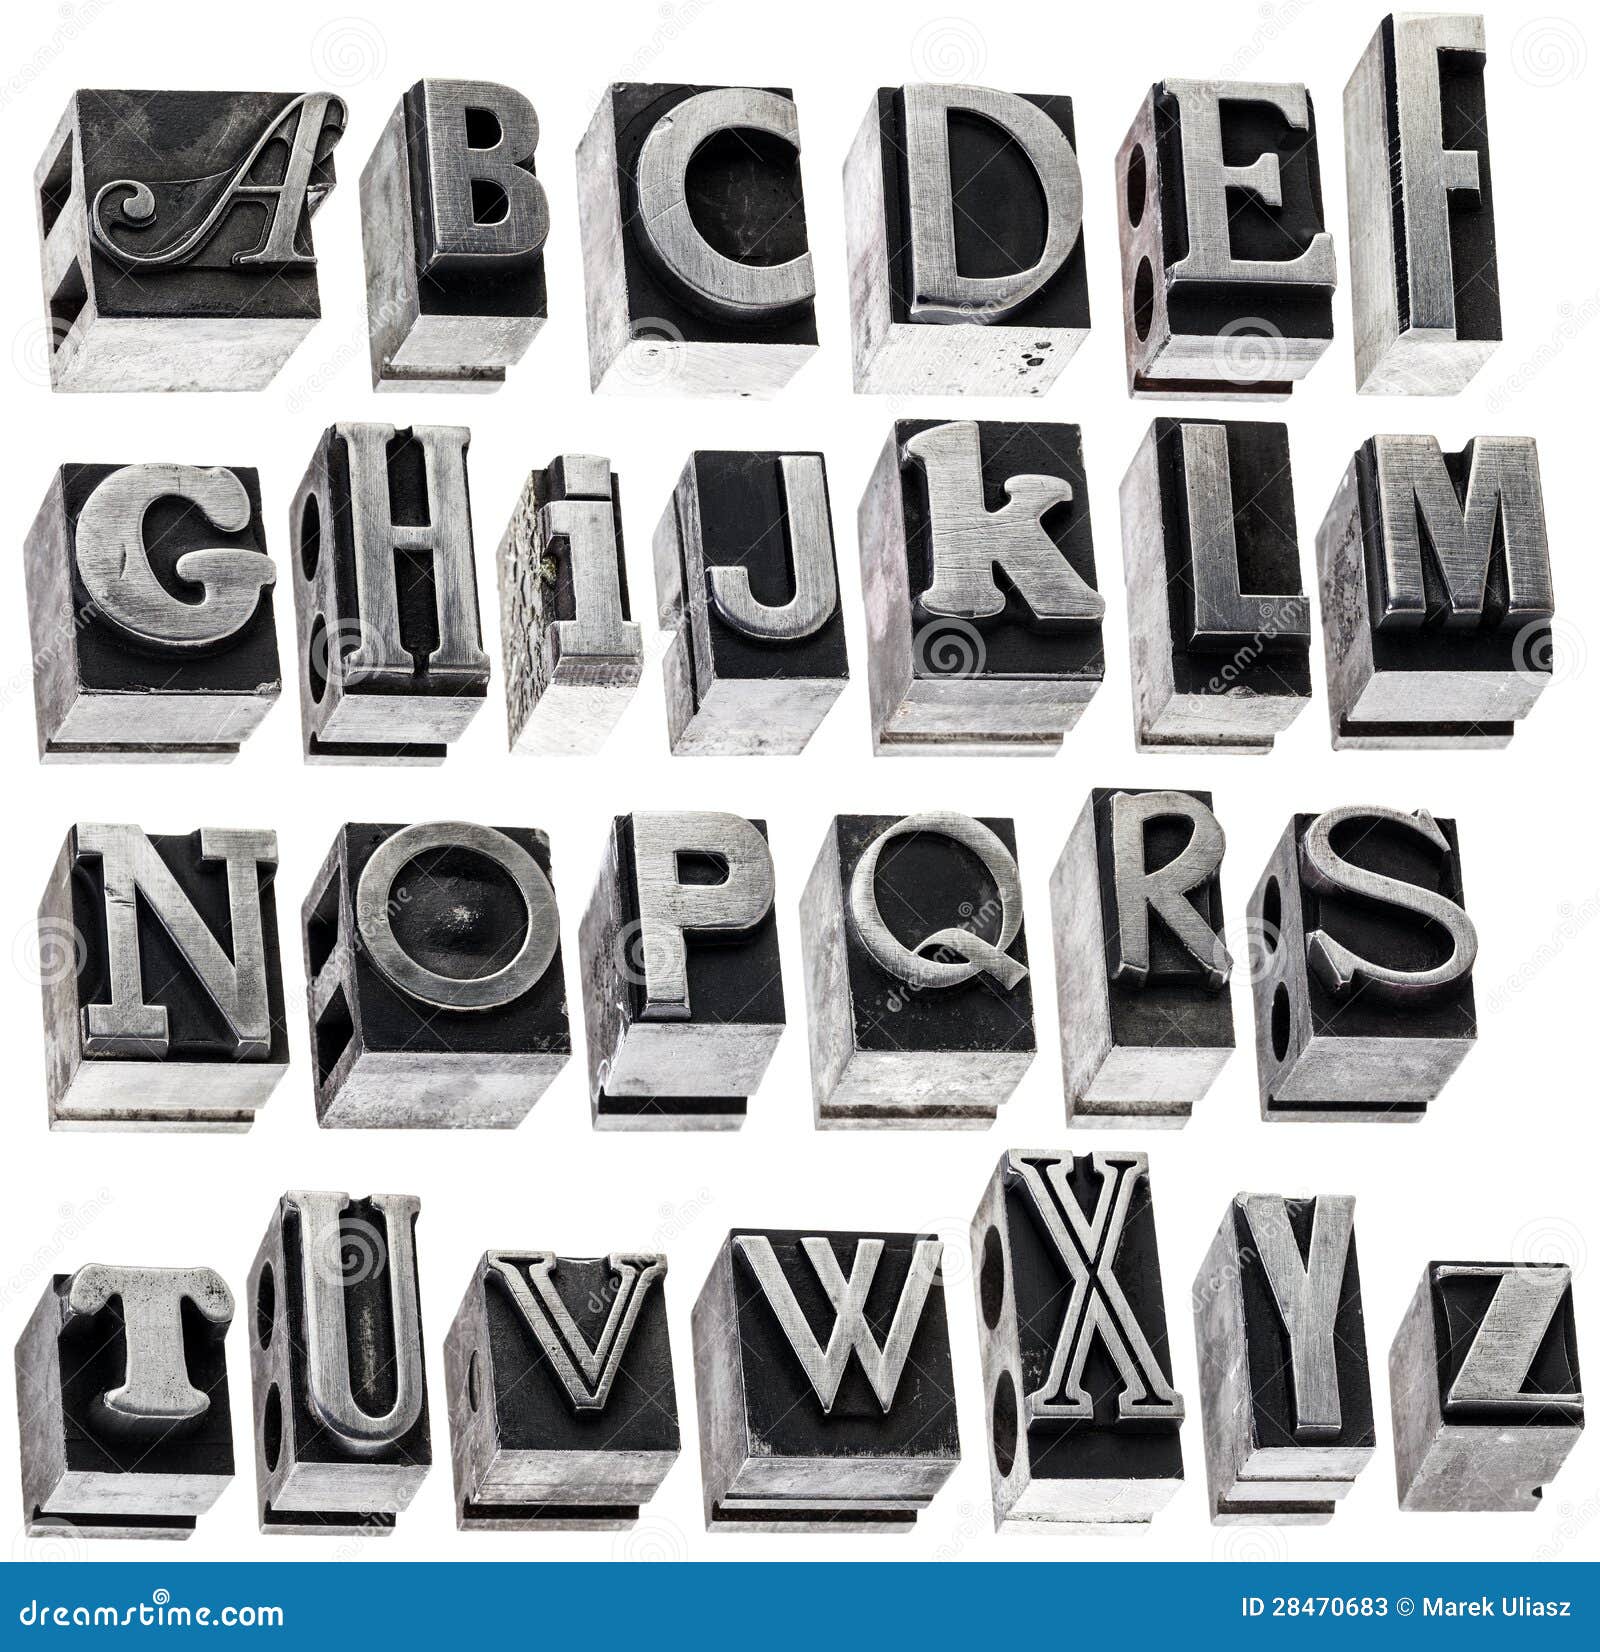 Lot of 50 VINTAGE Metal LETTERPRESS Print Type Block Alphabet Letters & Numbers 